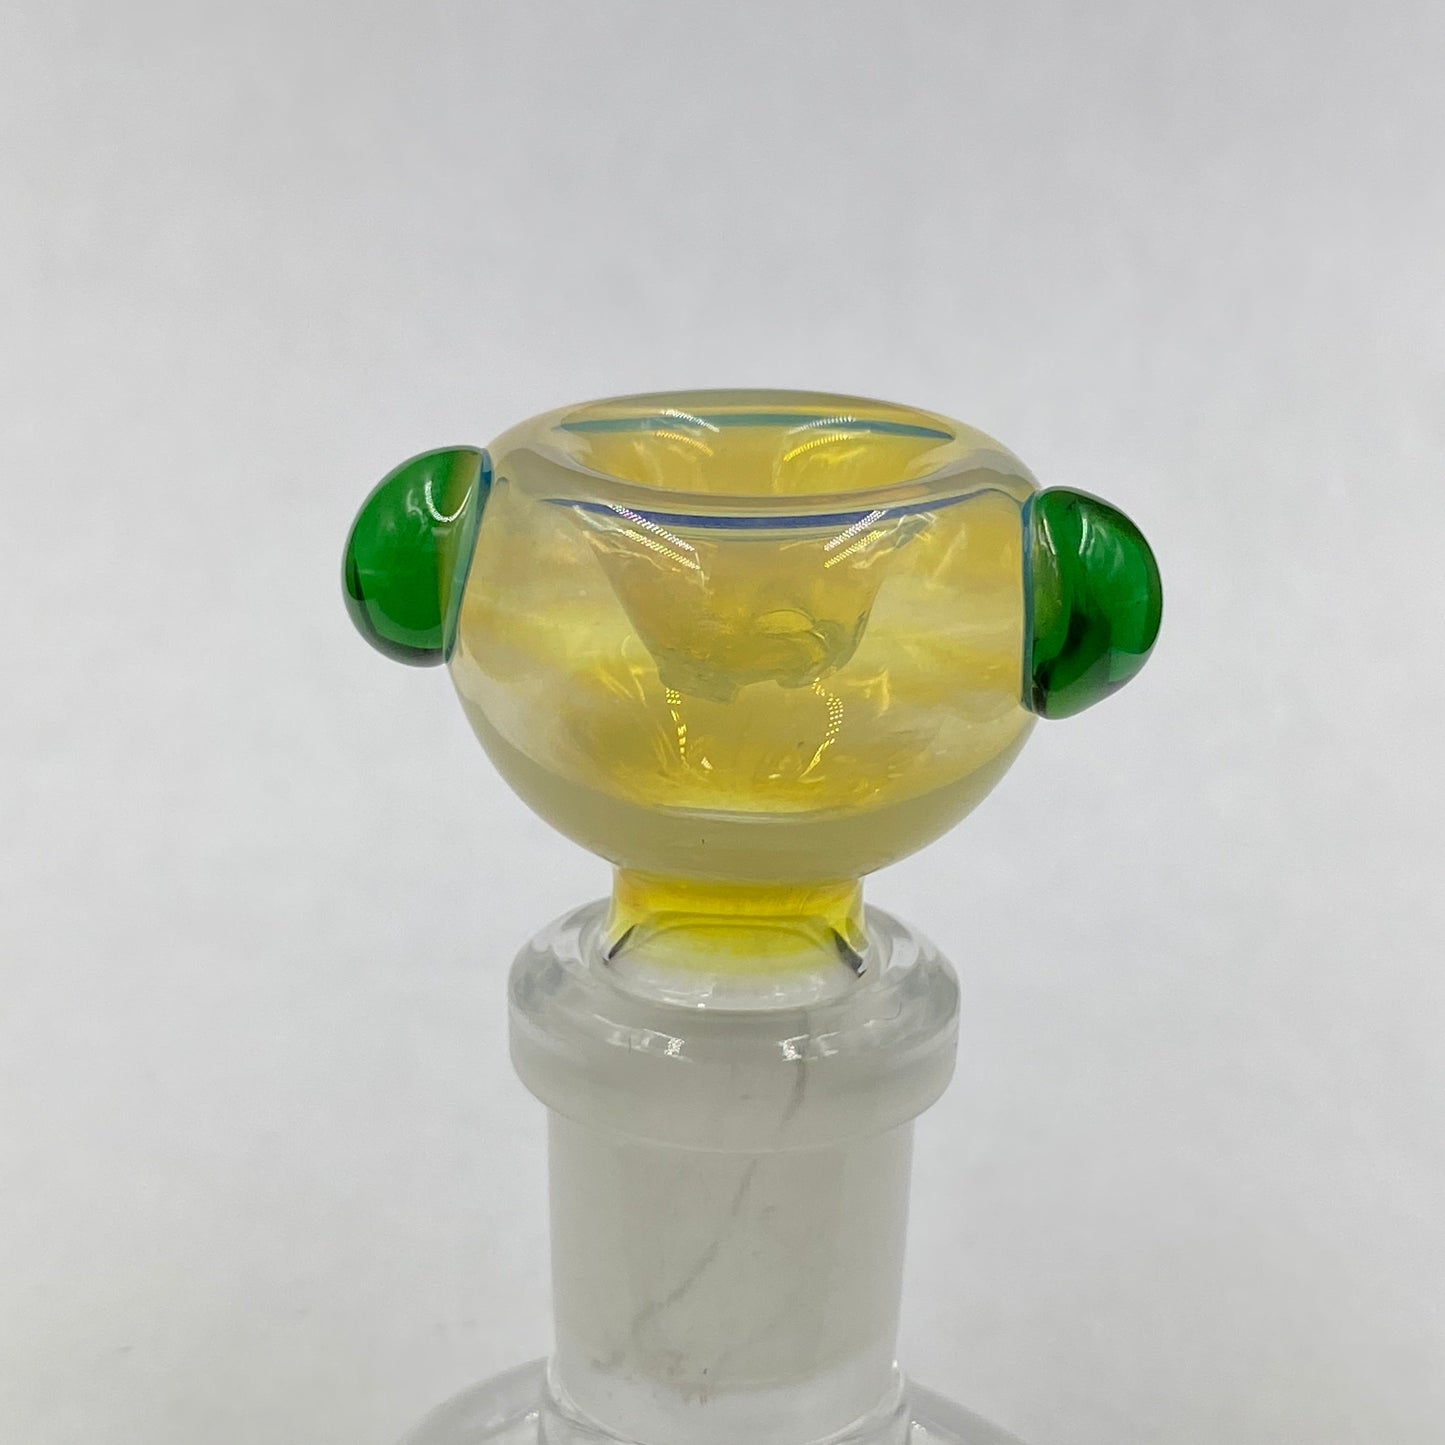 Kitchen Glass Designs - 10mm 4-Hole Slide